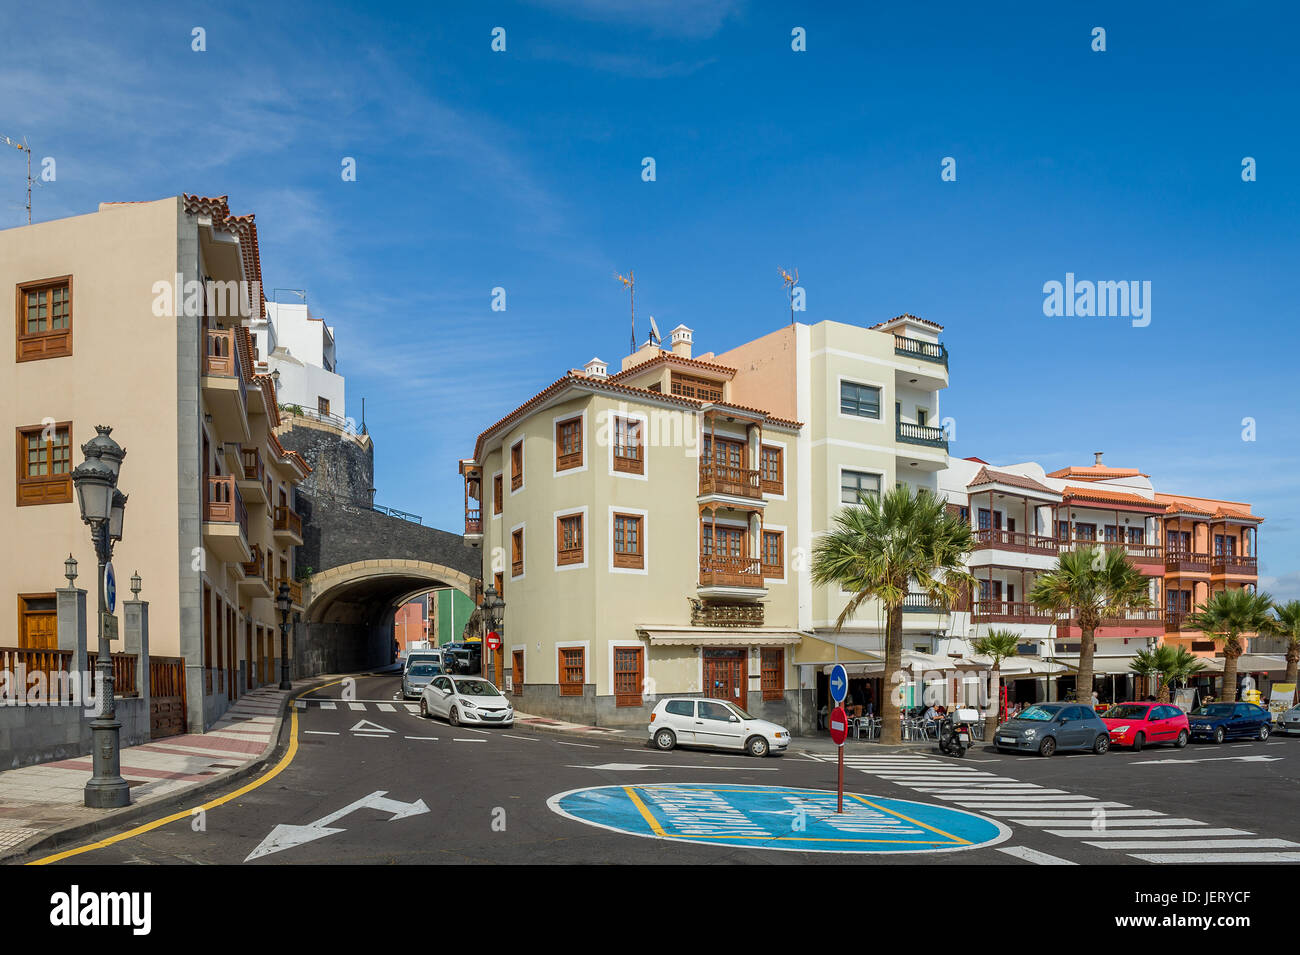 Candelaria, Tenerife island Stock Photo